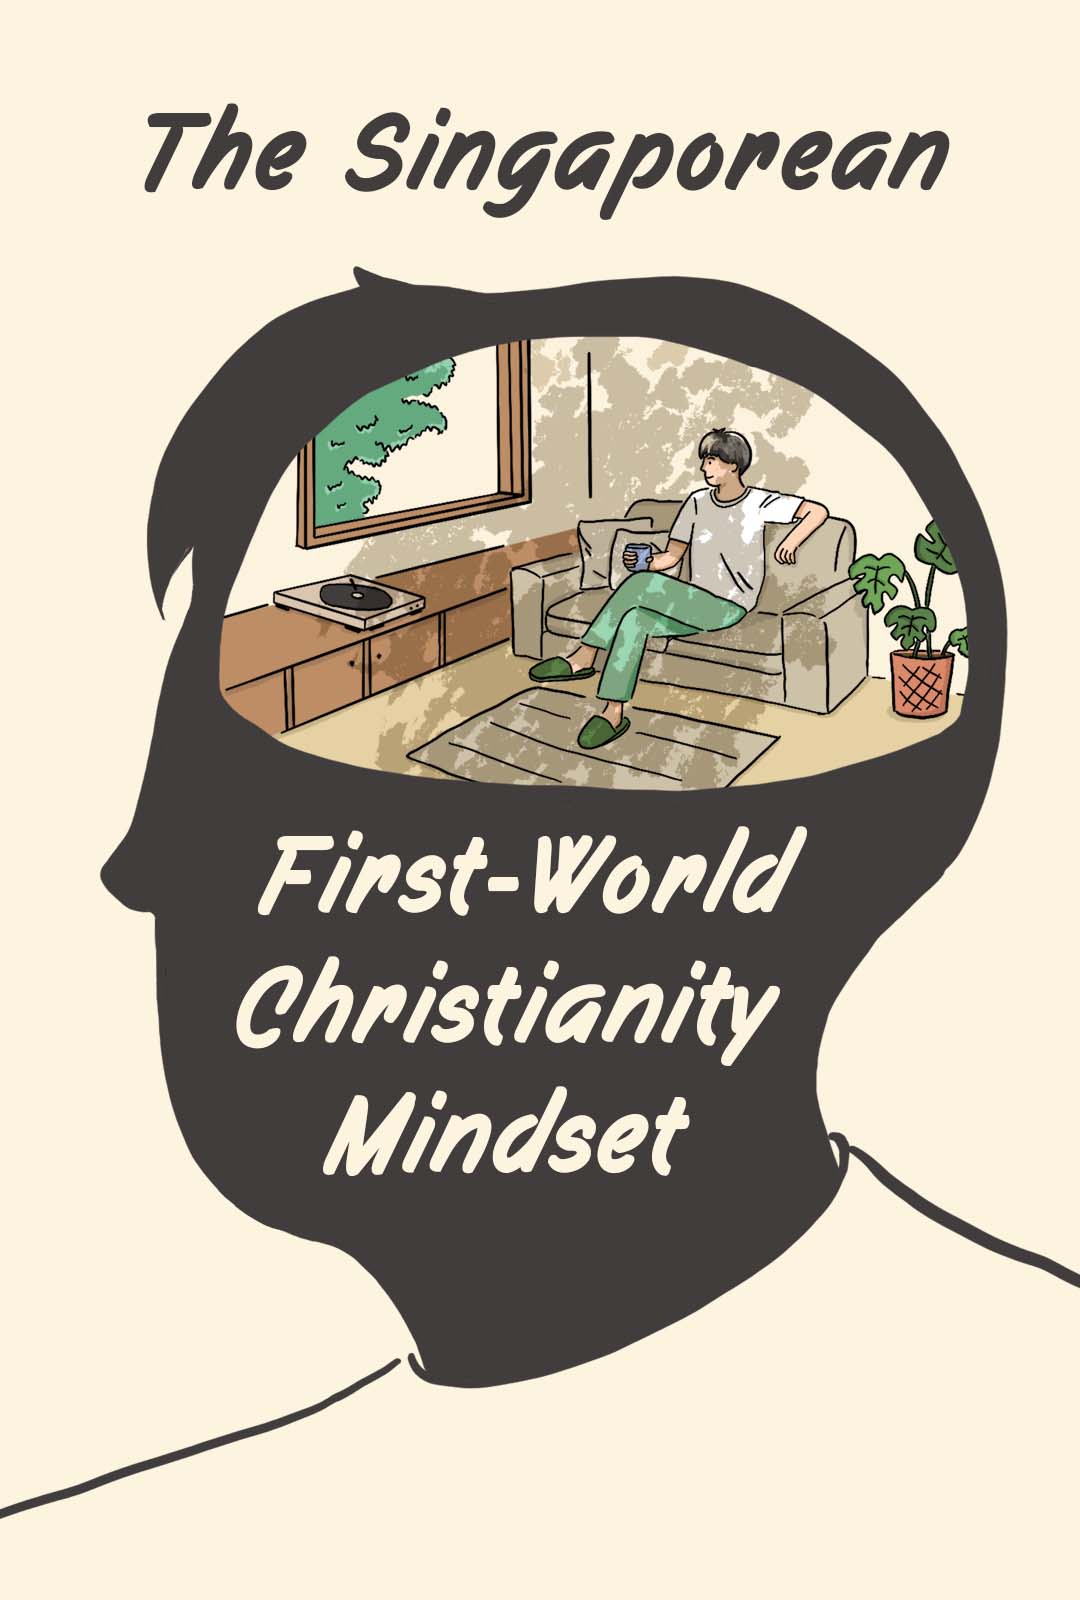 The Singaporean First-World Christianity Mindset